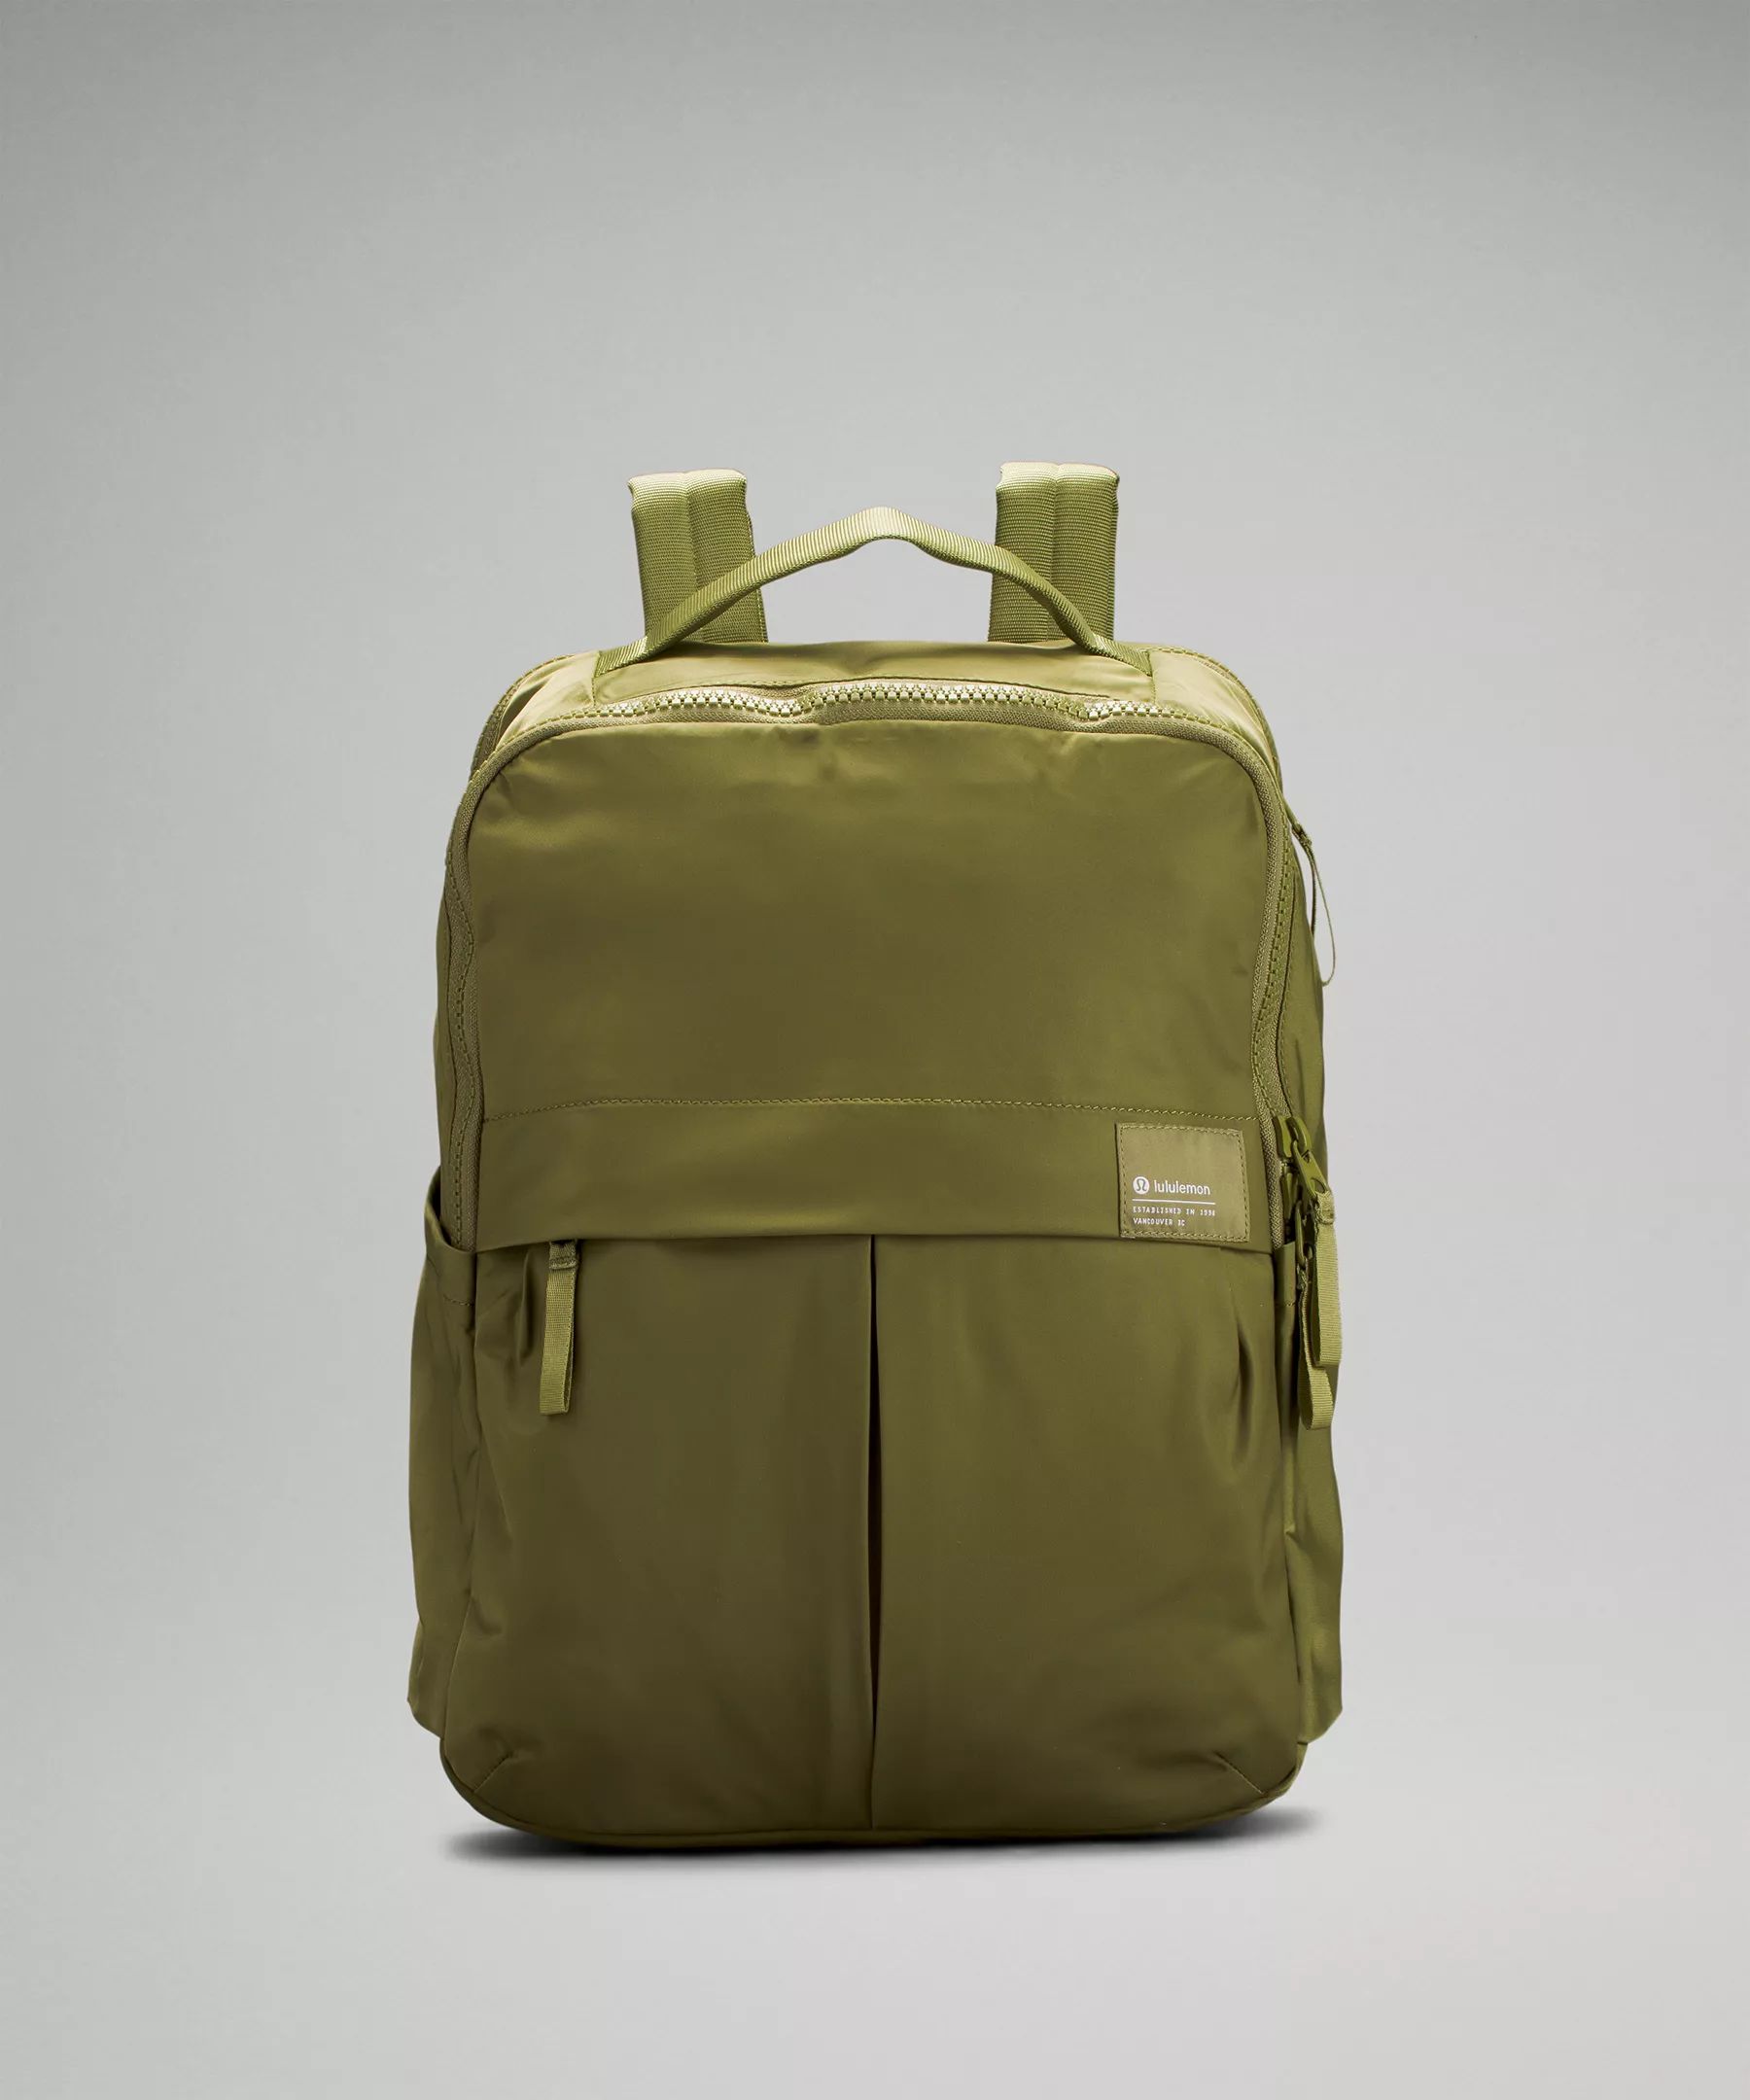 Everyday Backpack 2.0 23L | Lululemon (US)